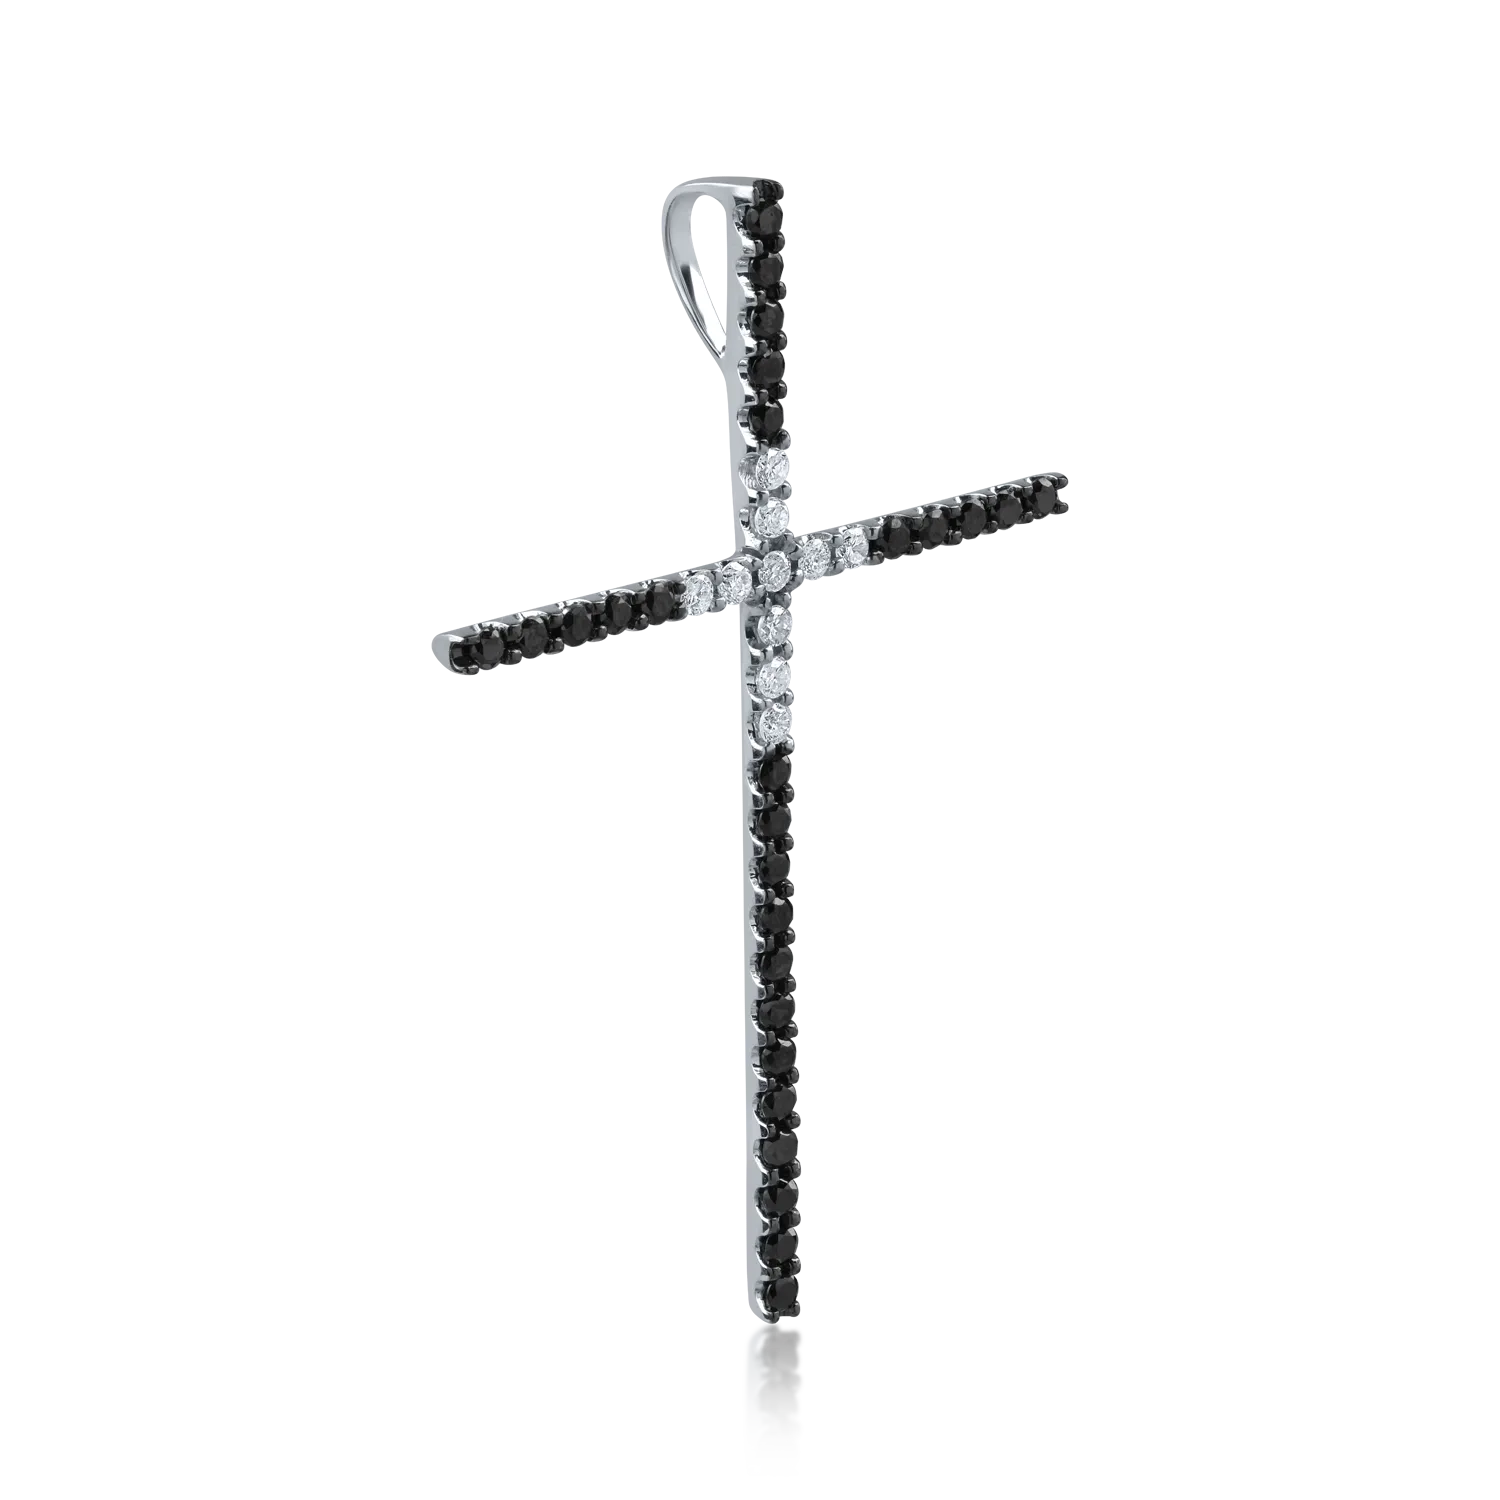 Pandantiv cruce din aur alb-negru cu diamante negre de 0.38ct si diamante incolore de 0.13ct